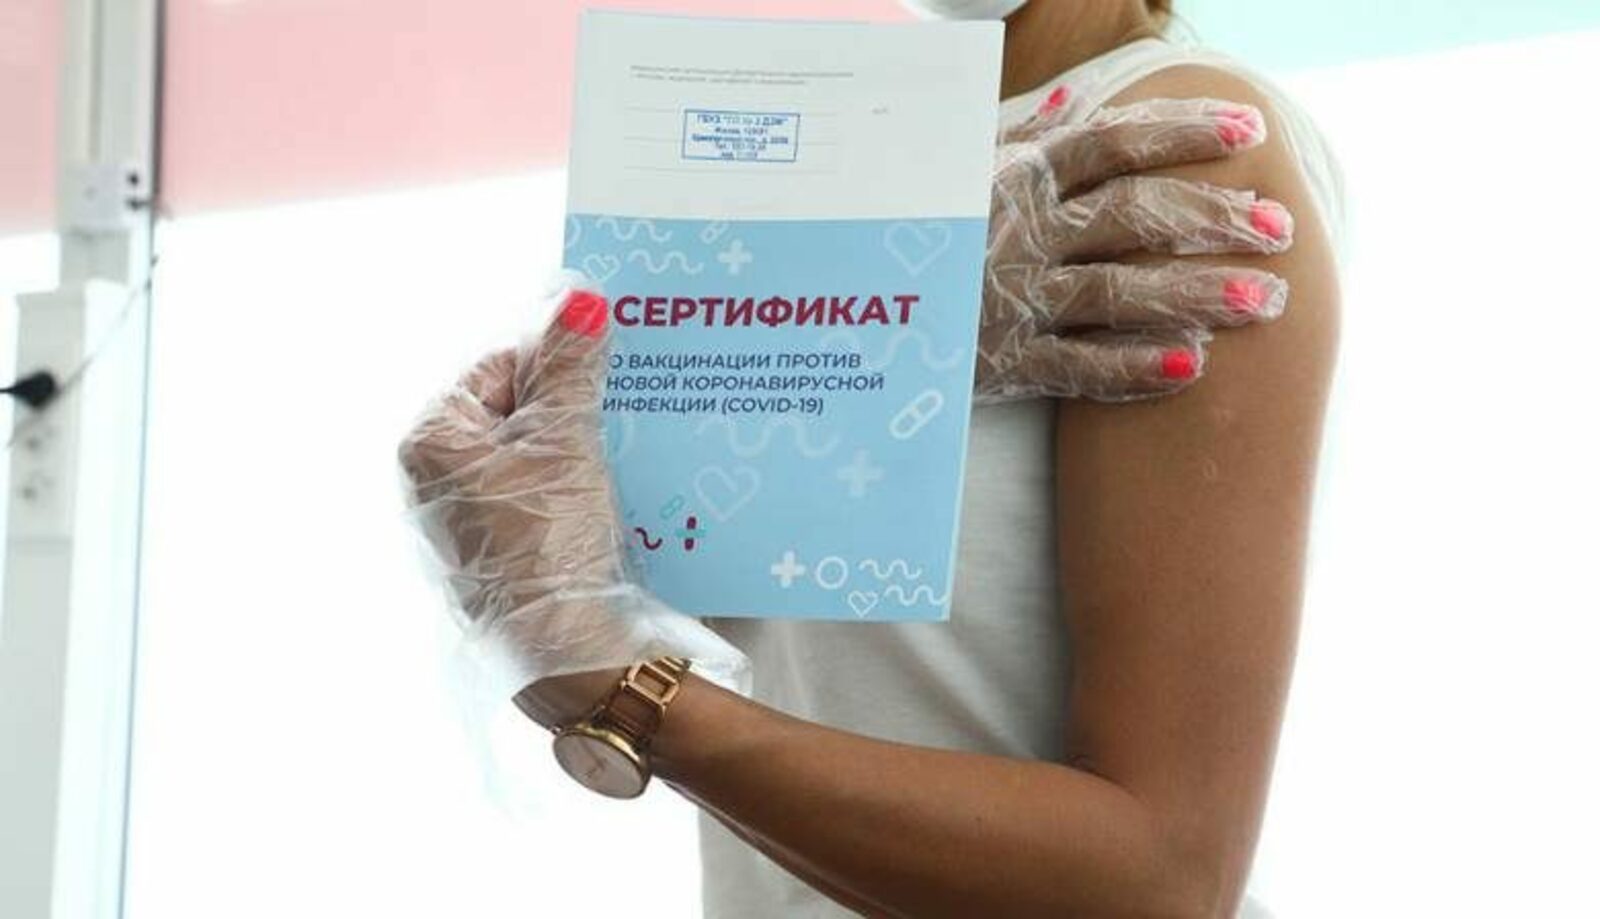 100 тысяч рублей за прививку